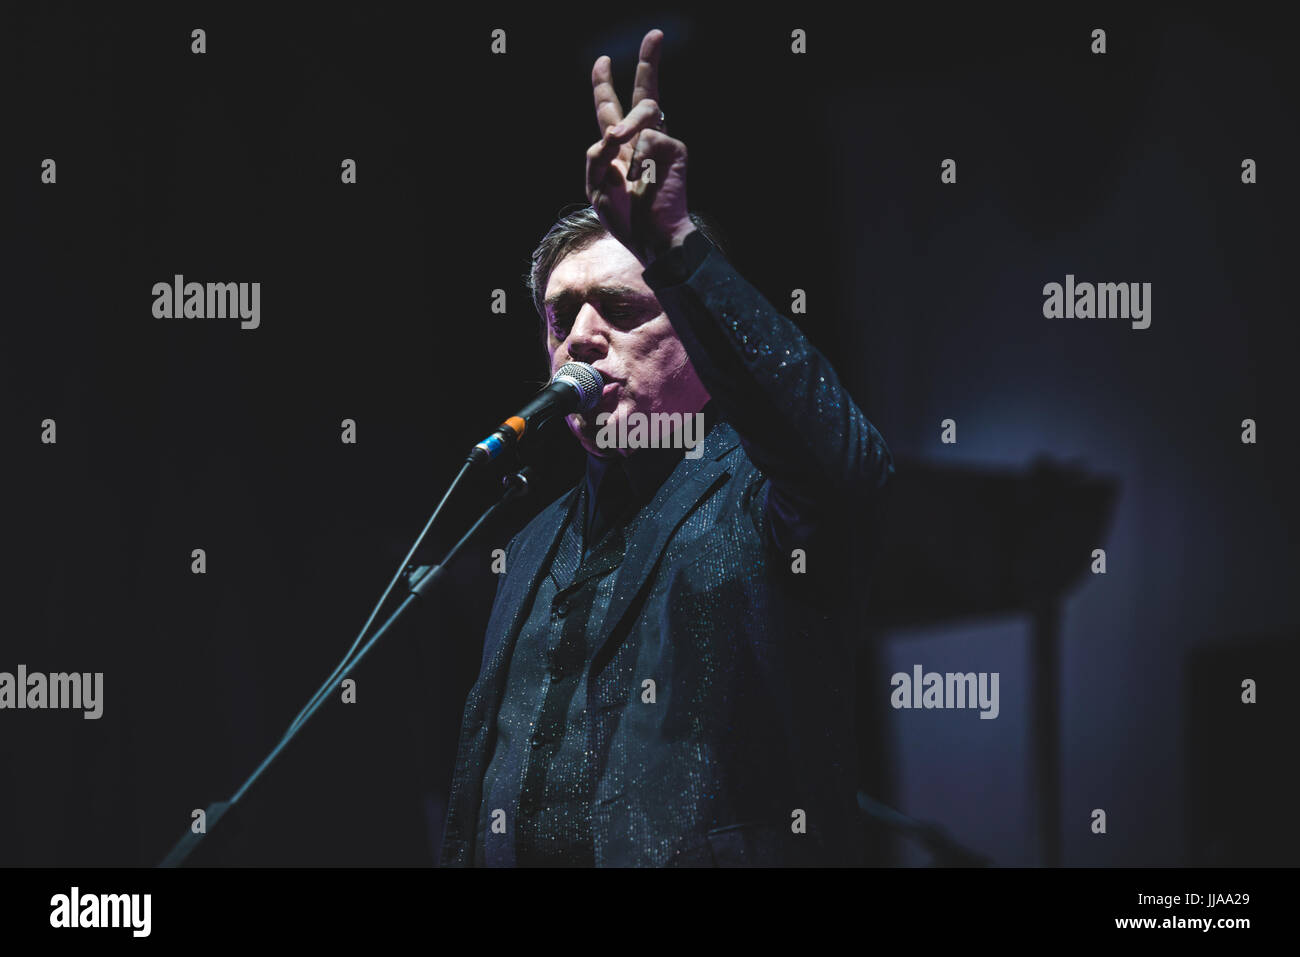 Collegno, Italy. 18th July, 2017. Einstürzende Neubauten performing live at the Flowers Festival 2017 in Collegno Photo: Alessandro Bosio/Alamy Live News Stock Photo